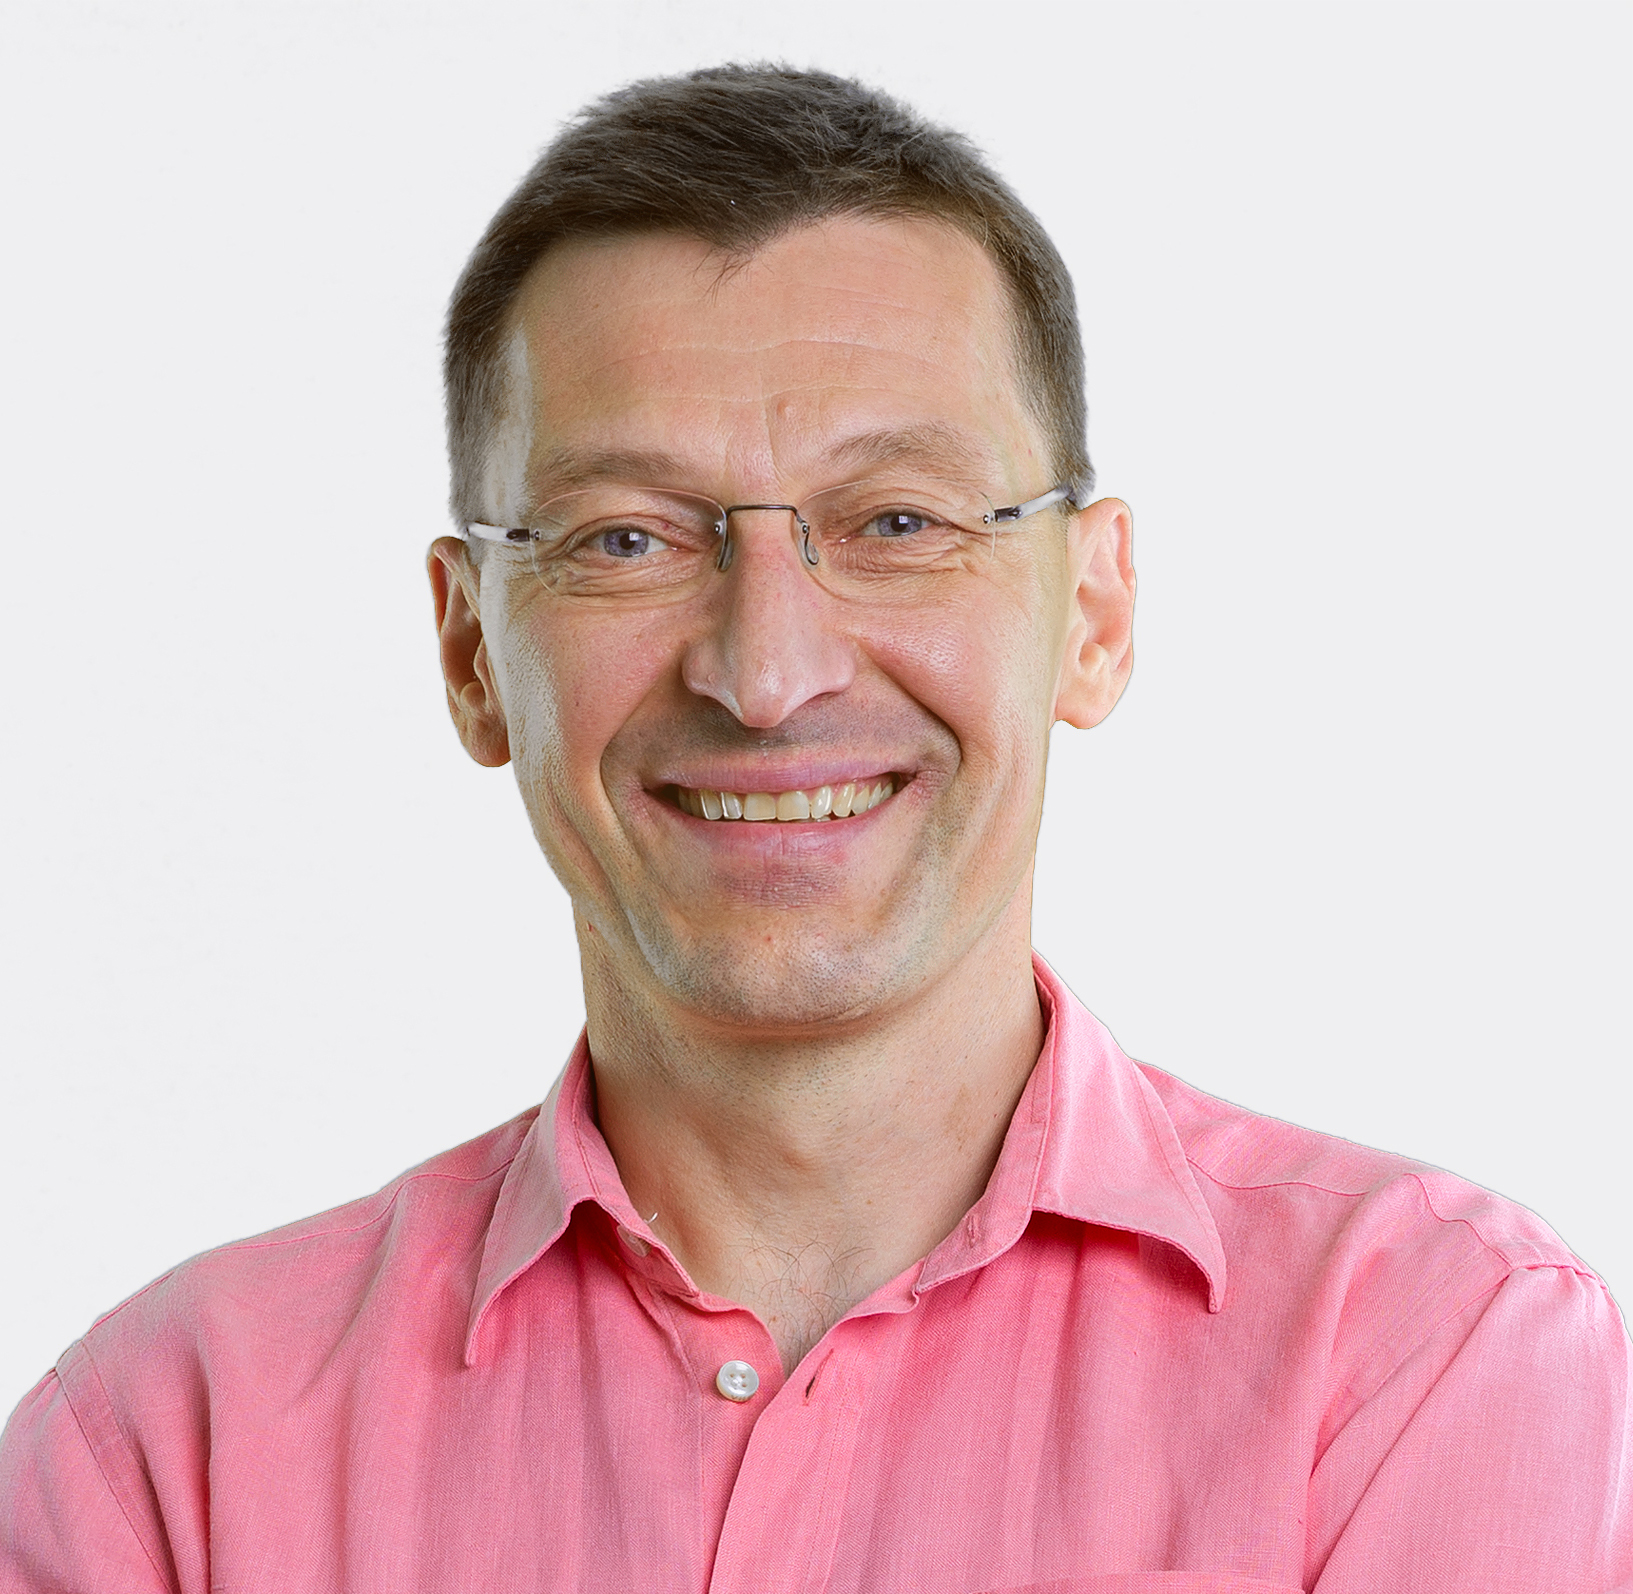 Pekka Rantala - Chief Marketing Officer of HMD Global